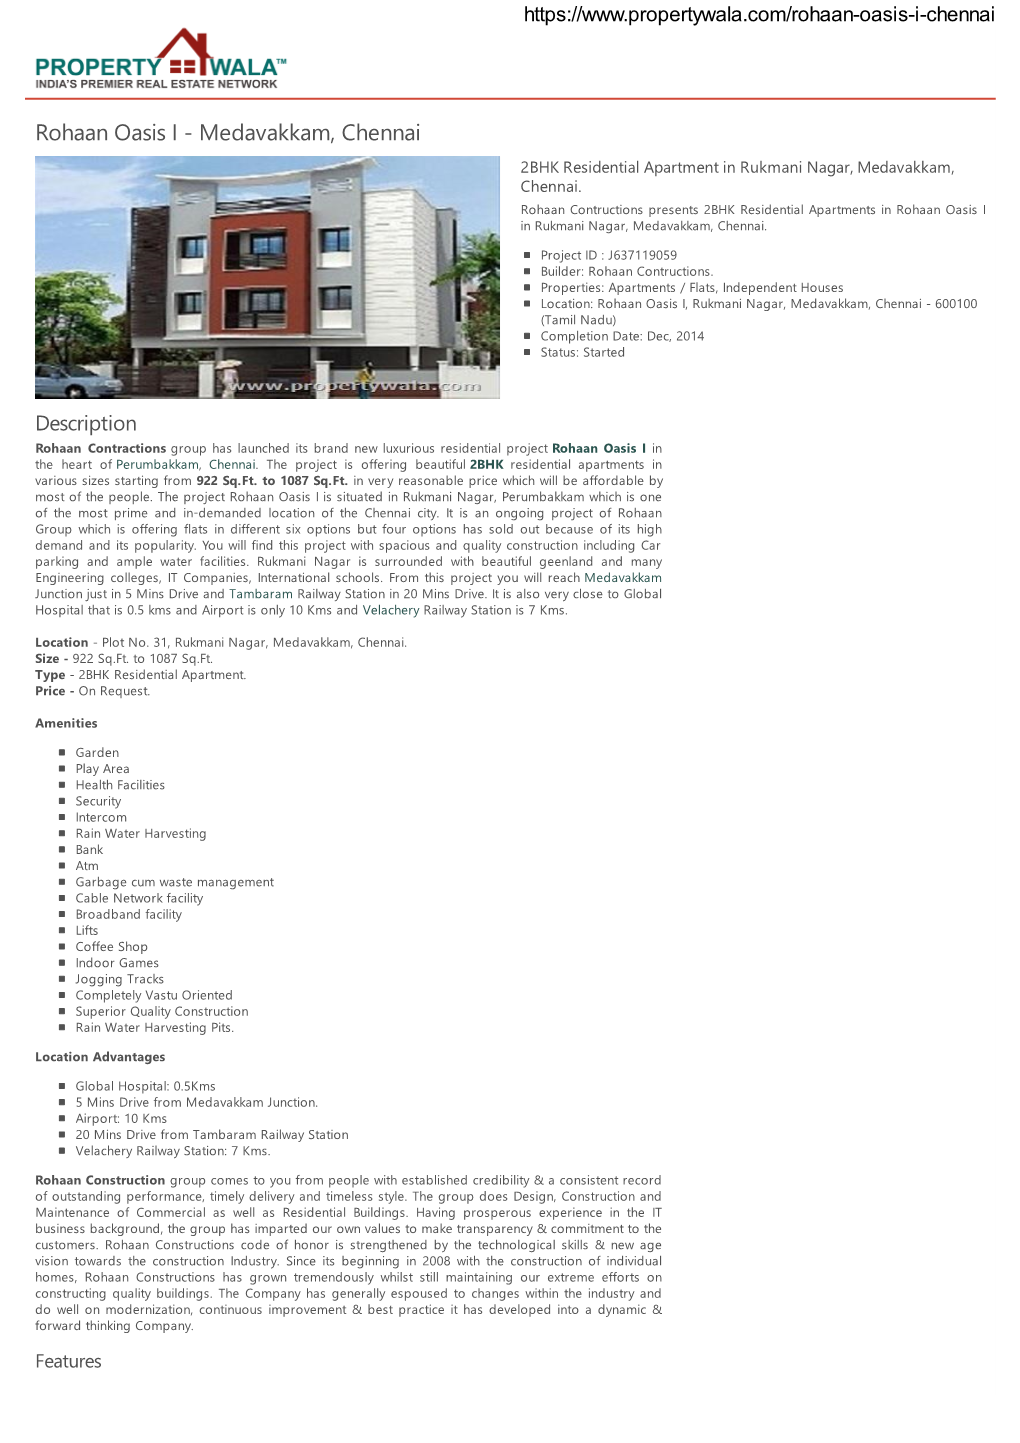 Rohaan Oasis I - Medavakkam, Chennai 2BHK Residential Apartment in Rukmani Nagar, Medavakkam, Chennai